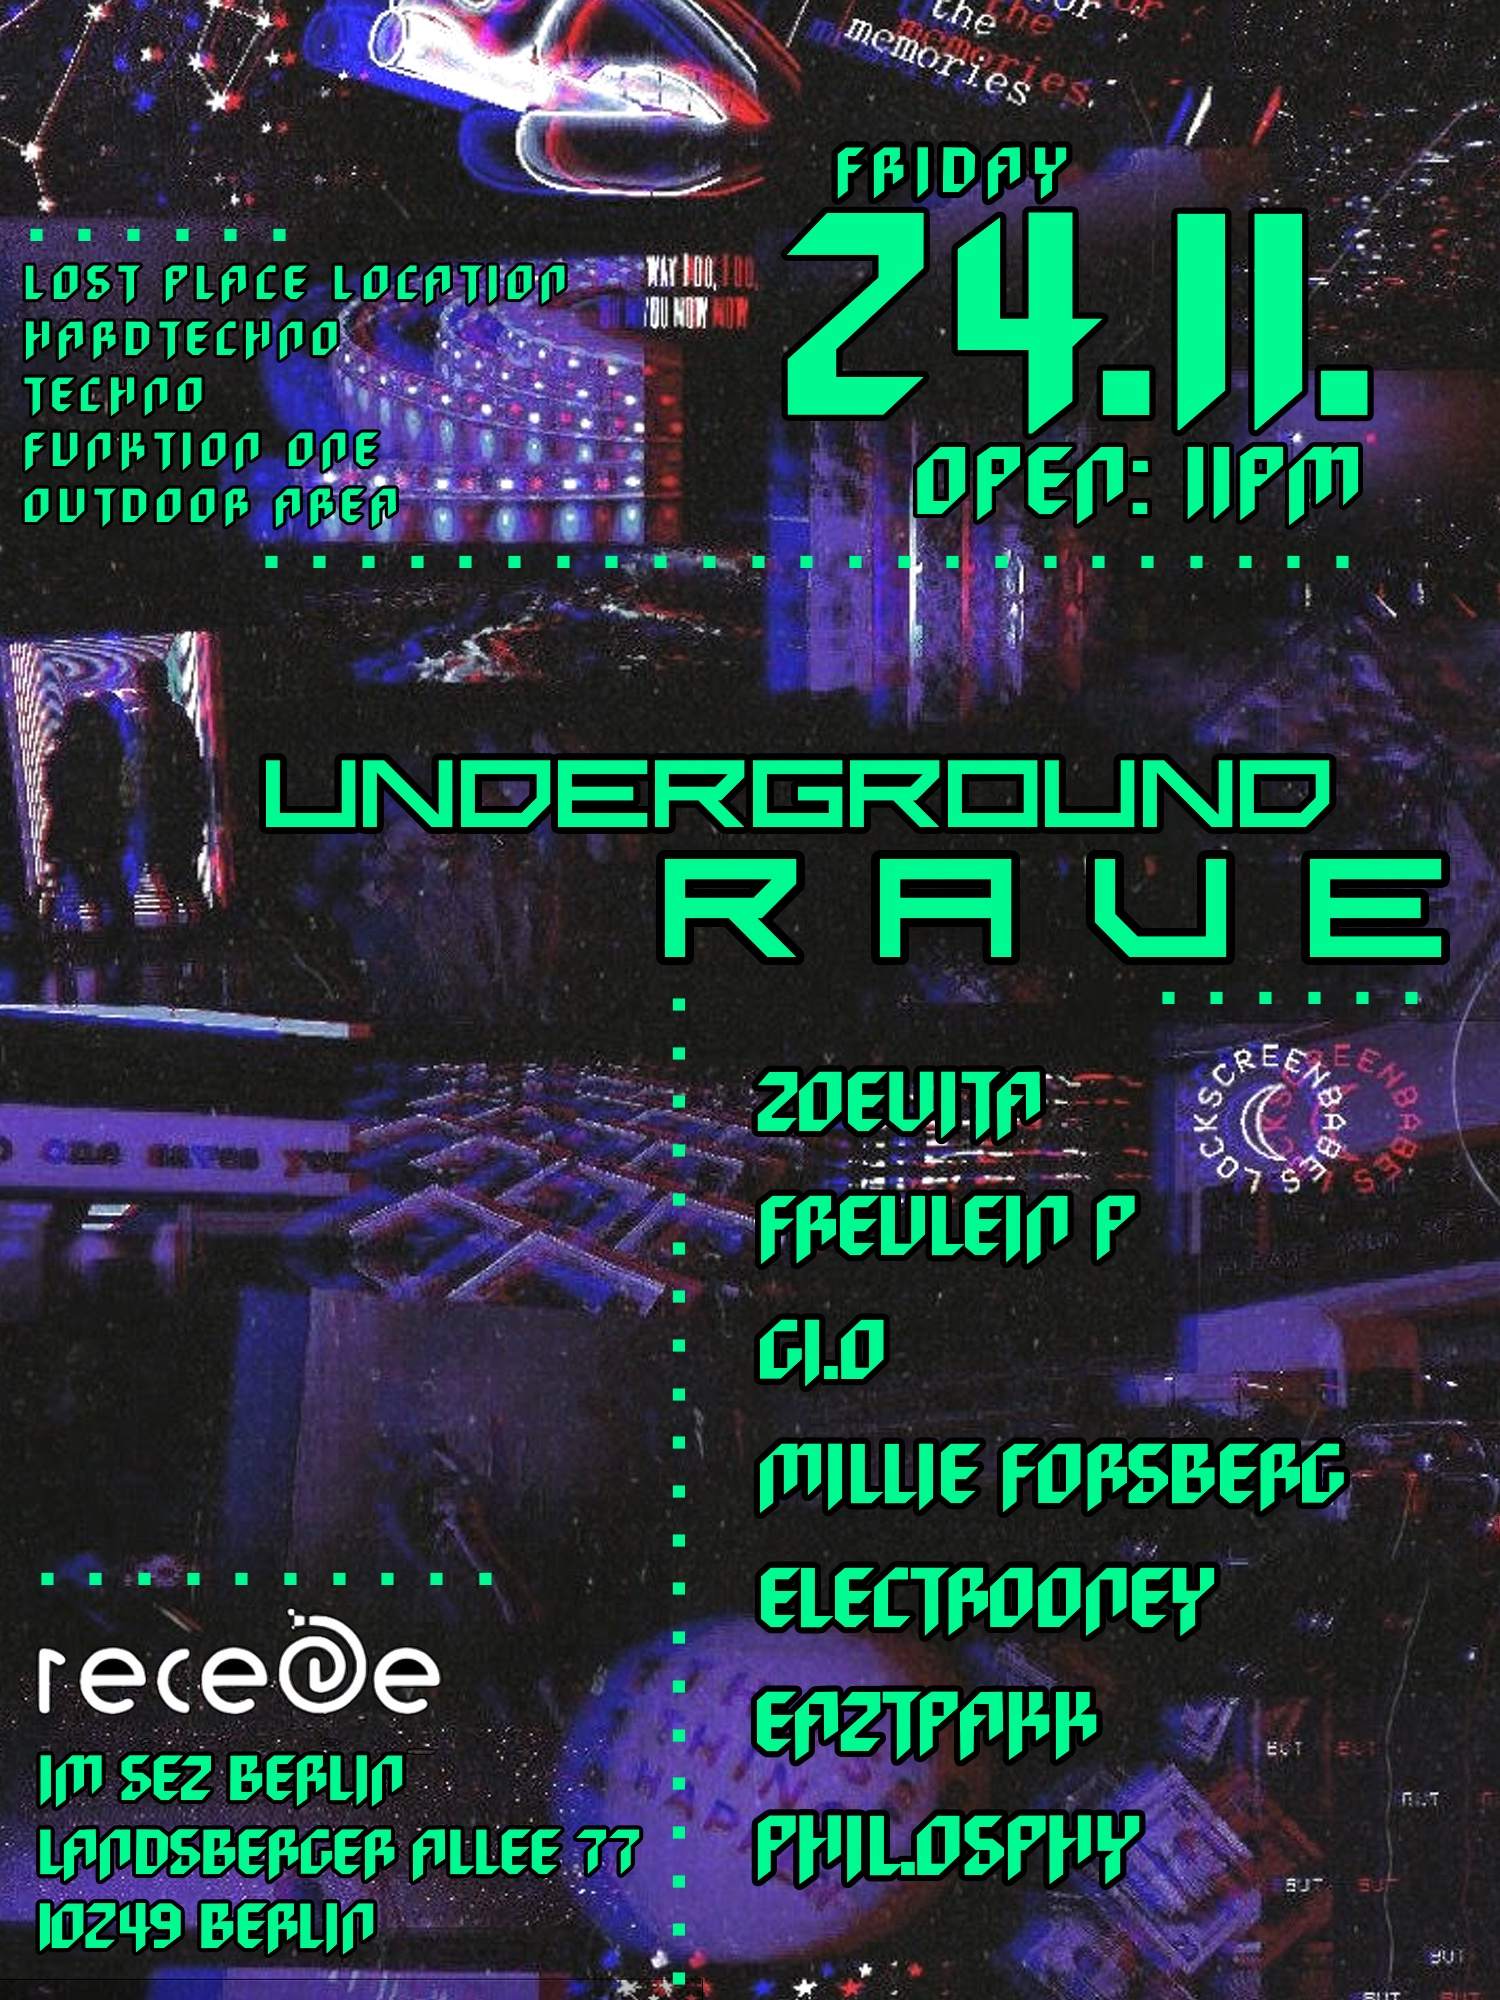 Underground Rave Berlin - Hardtechno / Techno at Recede Club Berlin, Berlin